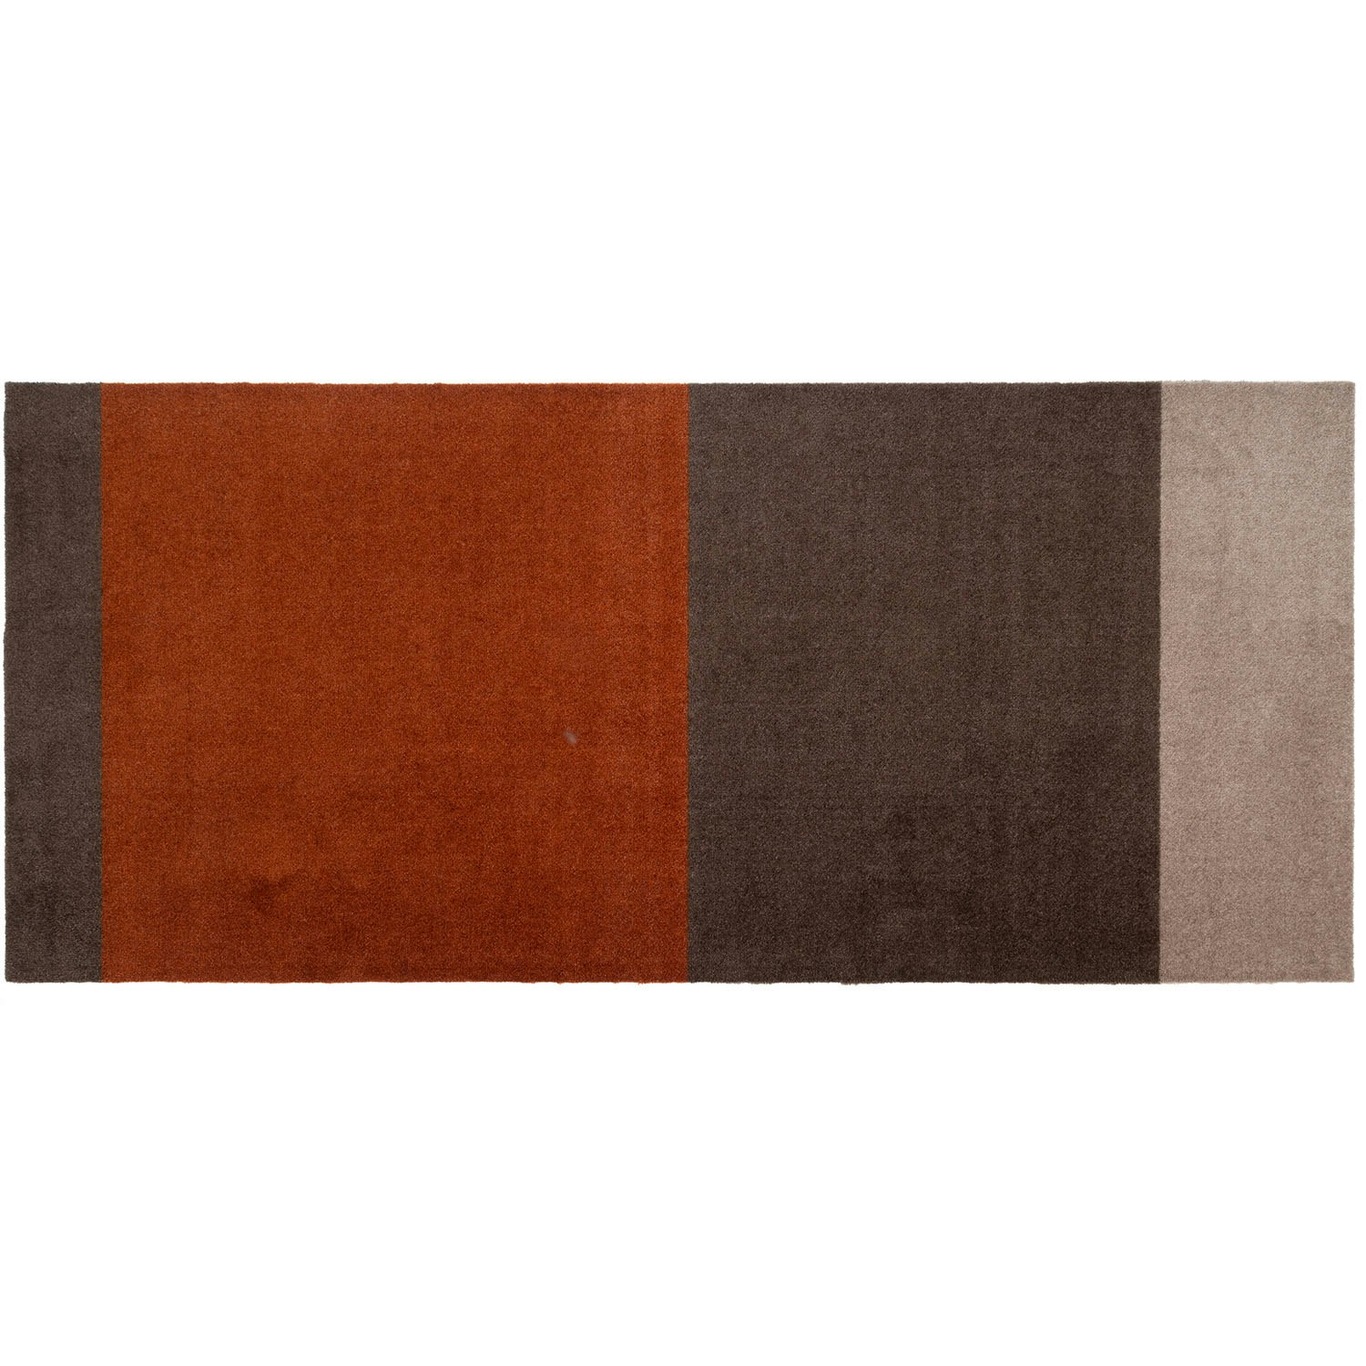 Stripes Matto Hiekanvärinen/Terracotta, 90x200 cm